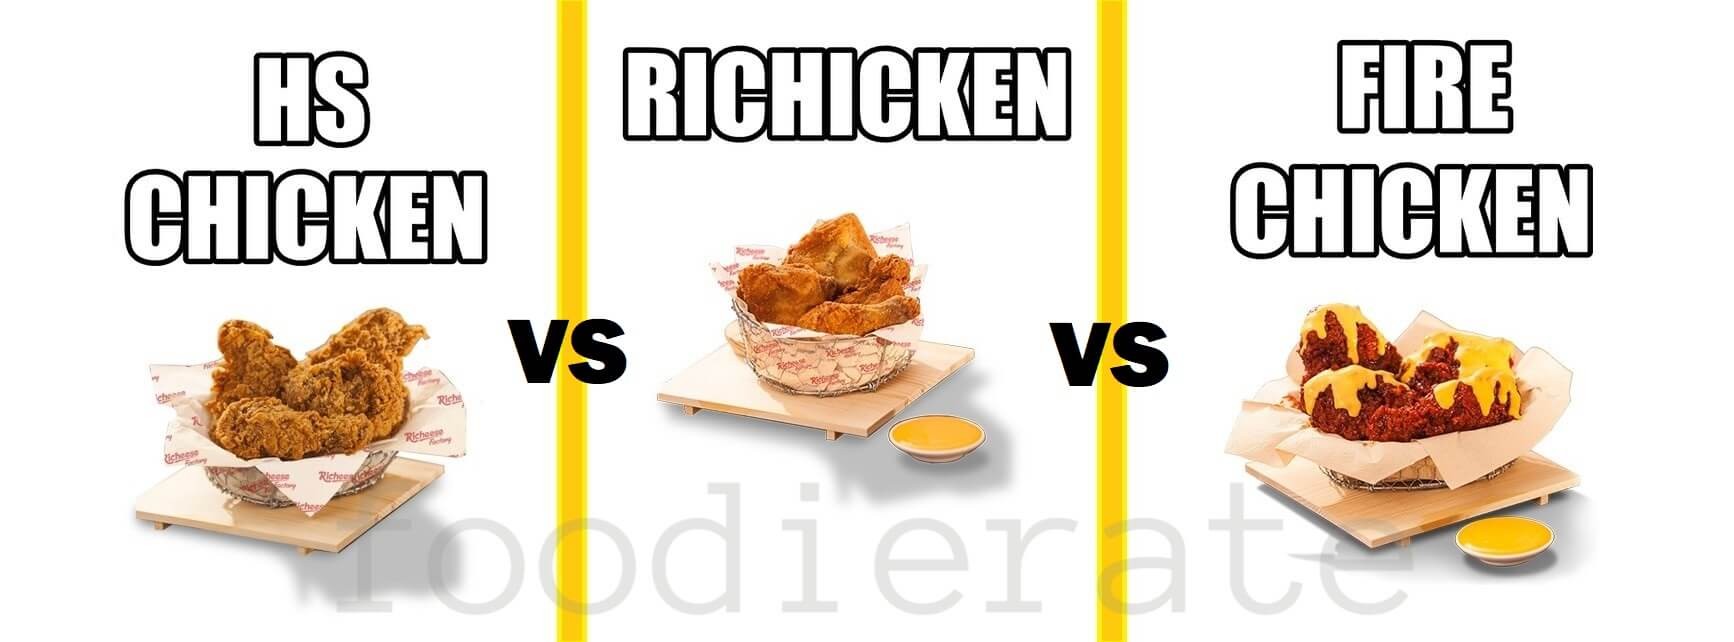 Perbedaan Antara HS Chicken, Richicken, dan Fire Chicken 